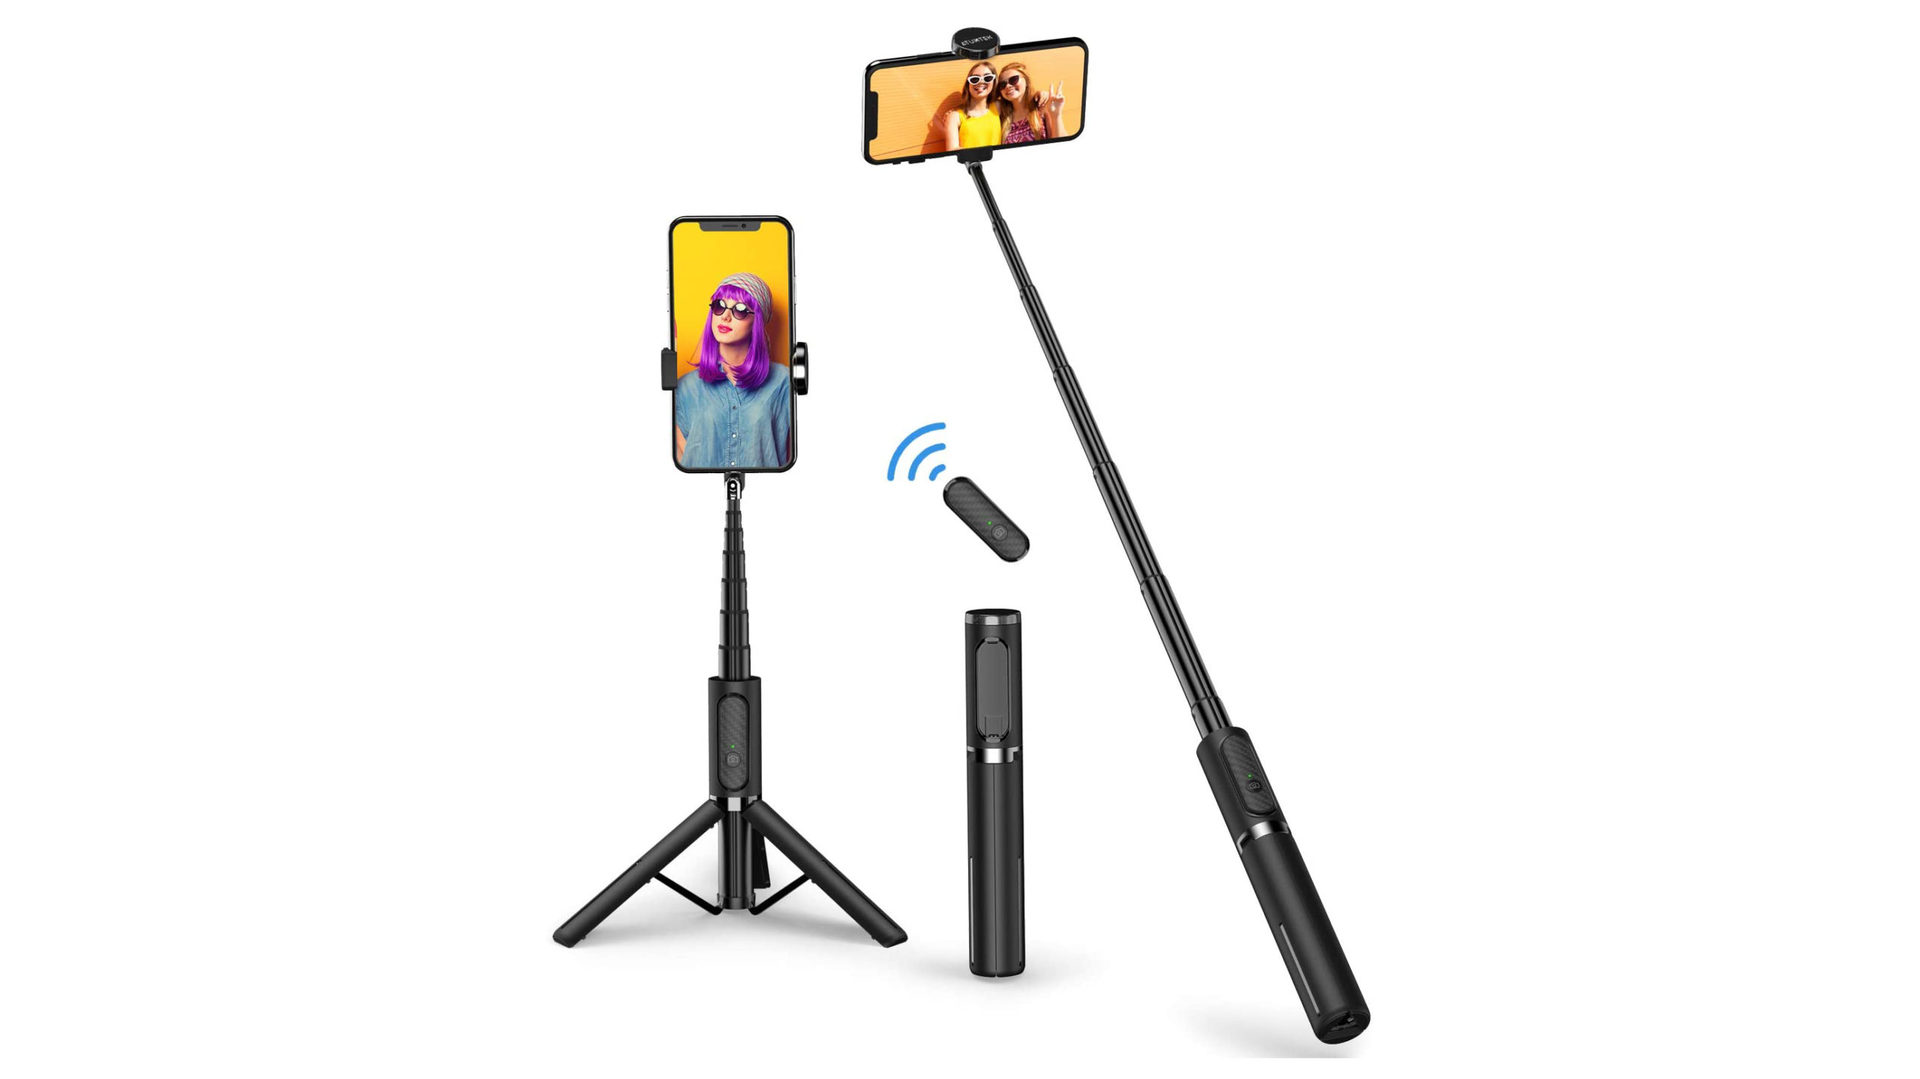 Atumtek Bluetoothj Selfie Stick Tripod